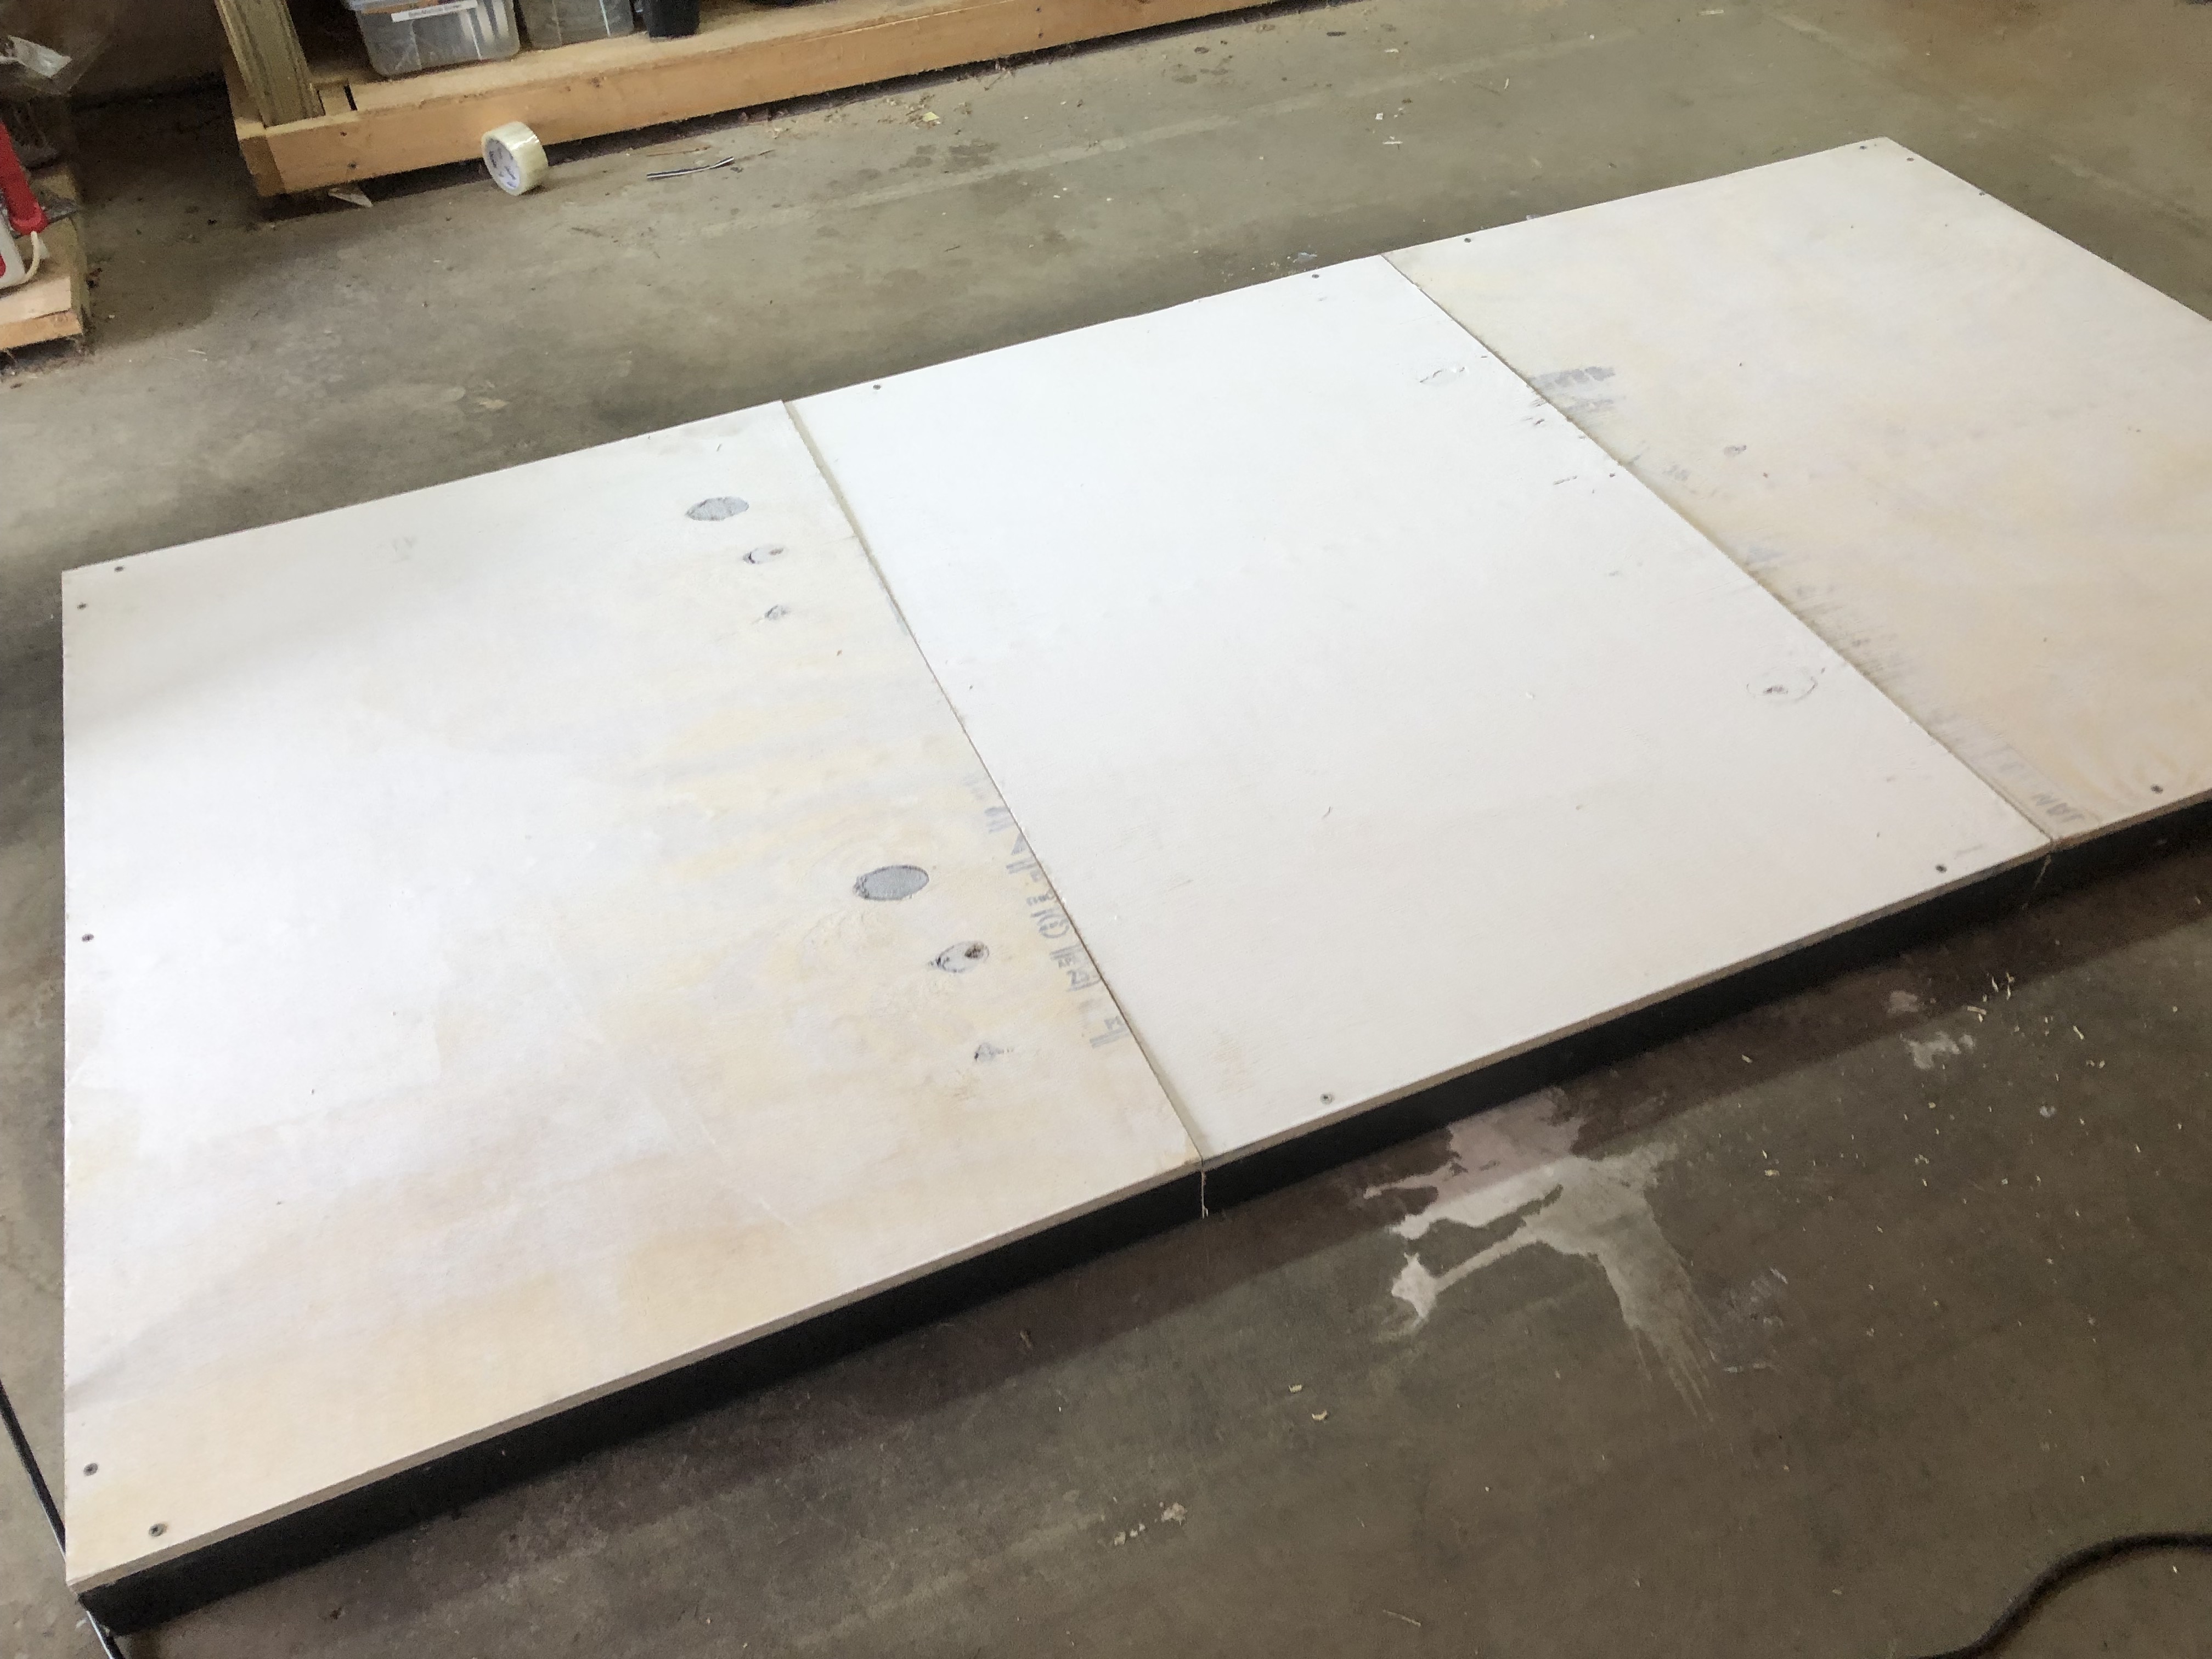 Flipped table for bottom hinge assembly